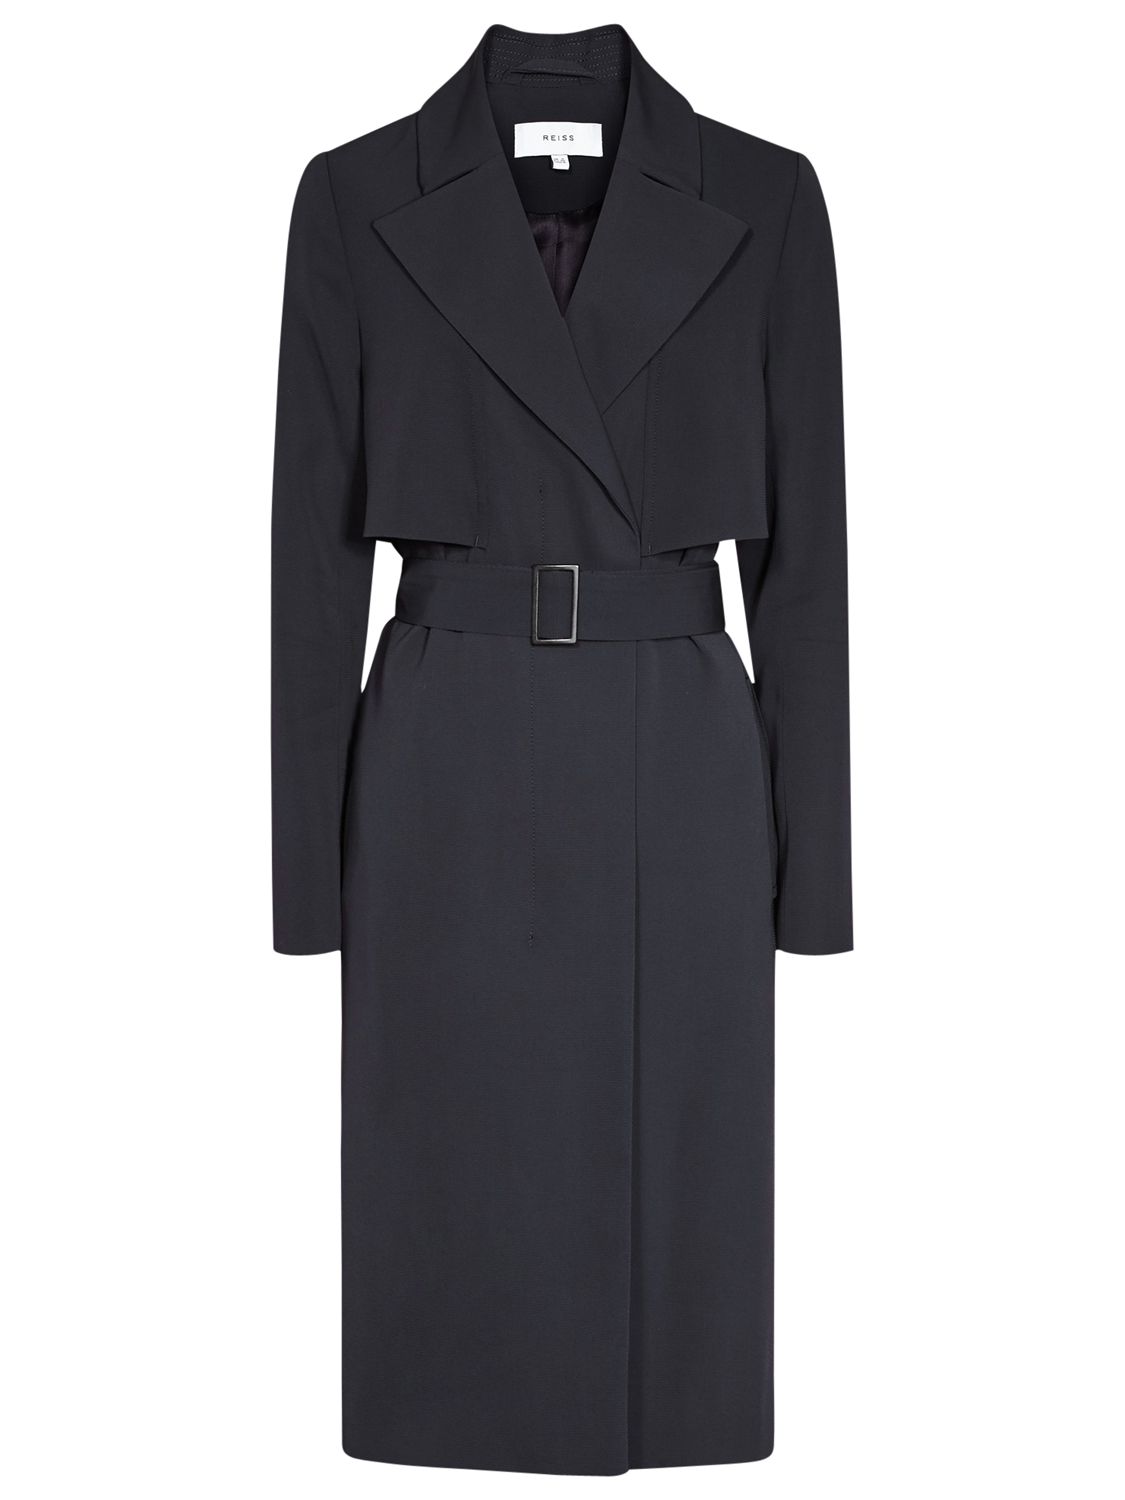 Long | Women's Coats & Jackets | John Lewis